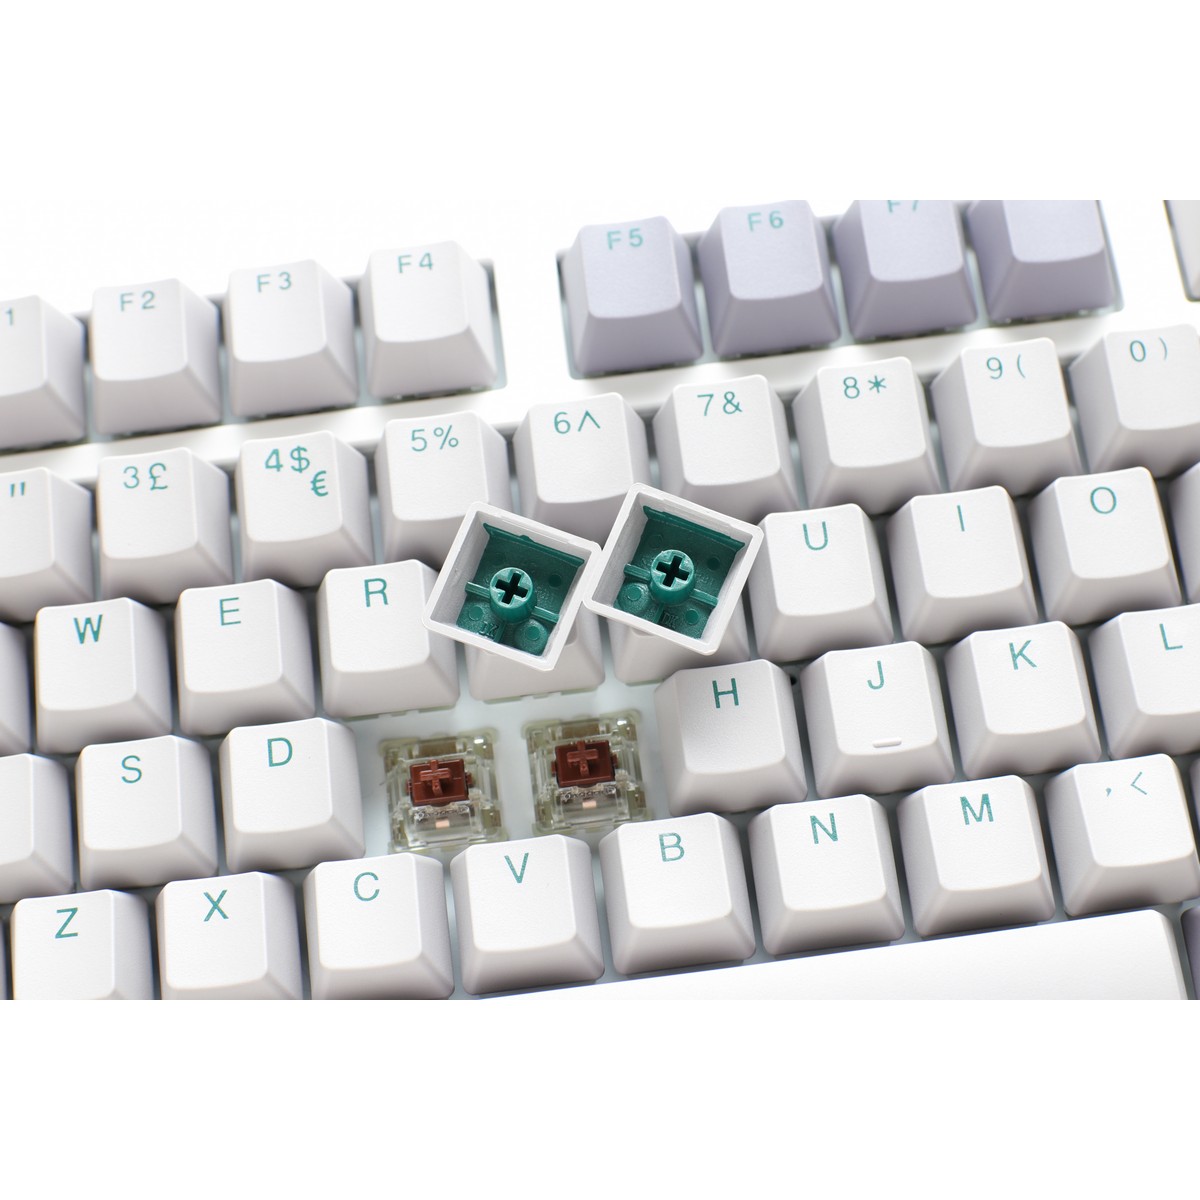 Ducky - Ducky One 3 Mist TKL 80% USB RGB Mechanical Gaming Keyboard Cherry MX Red Switch - UK Layout